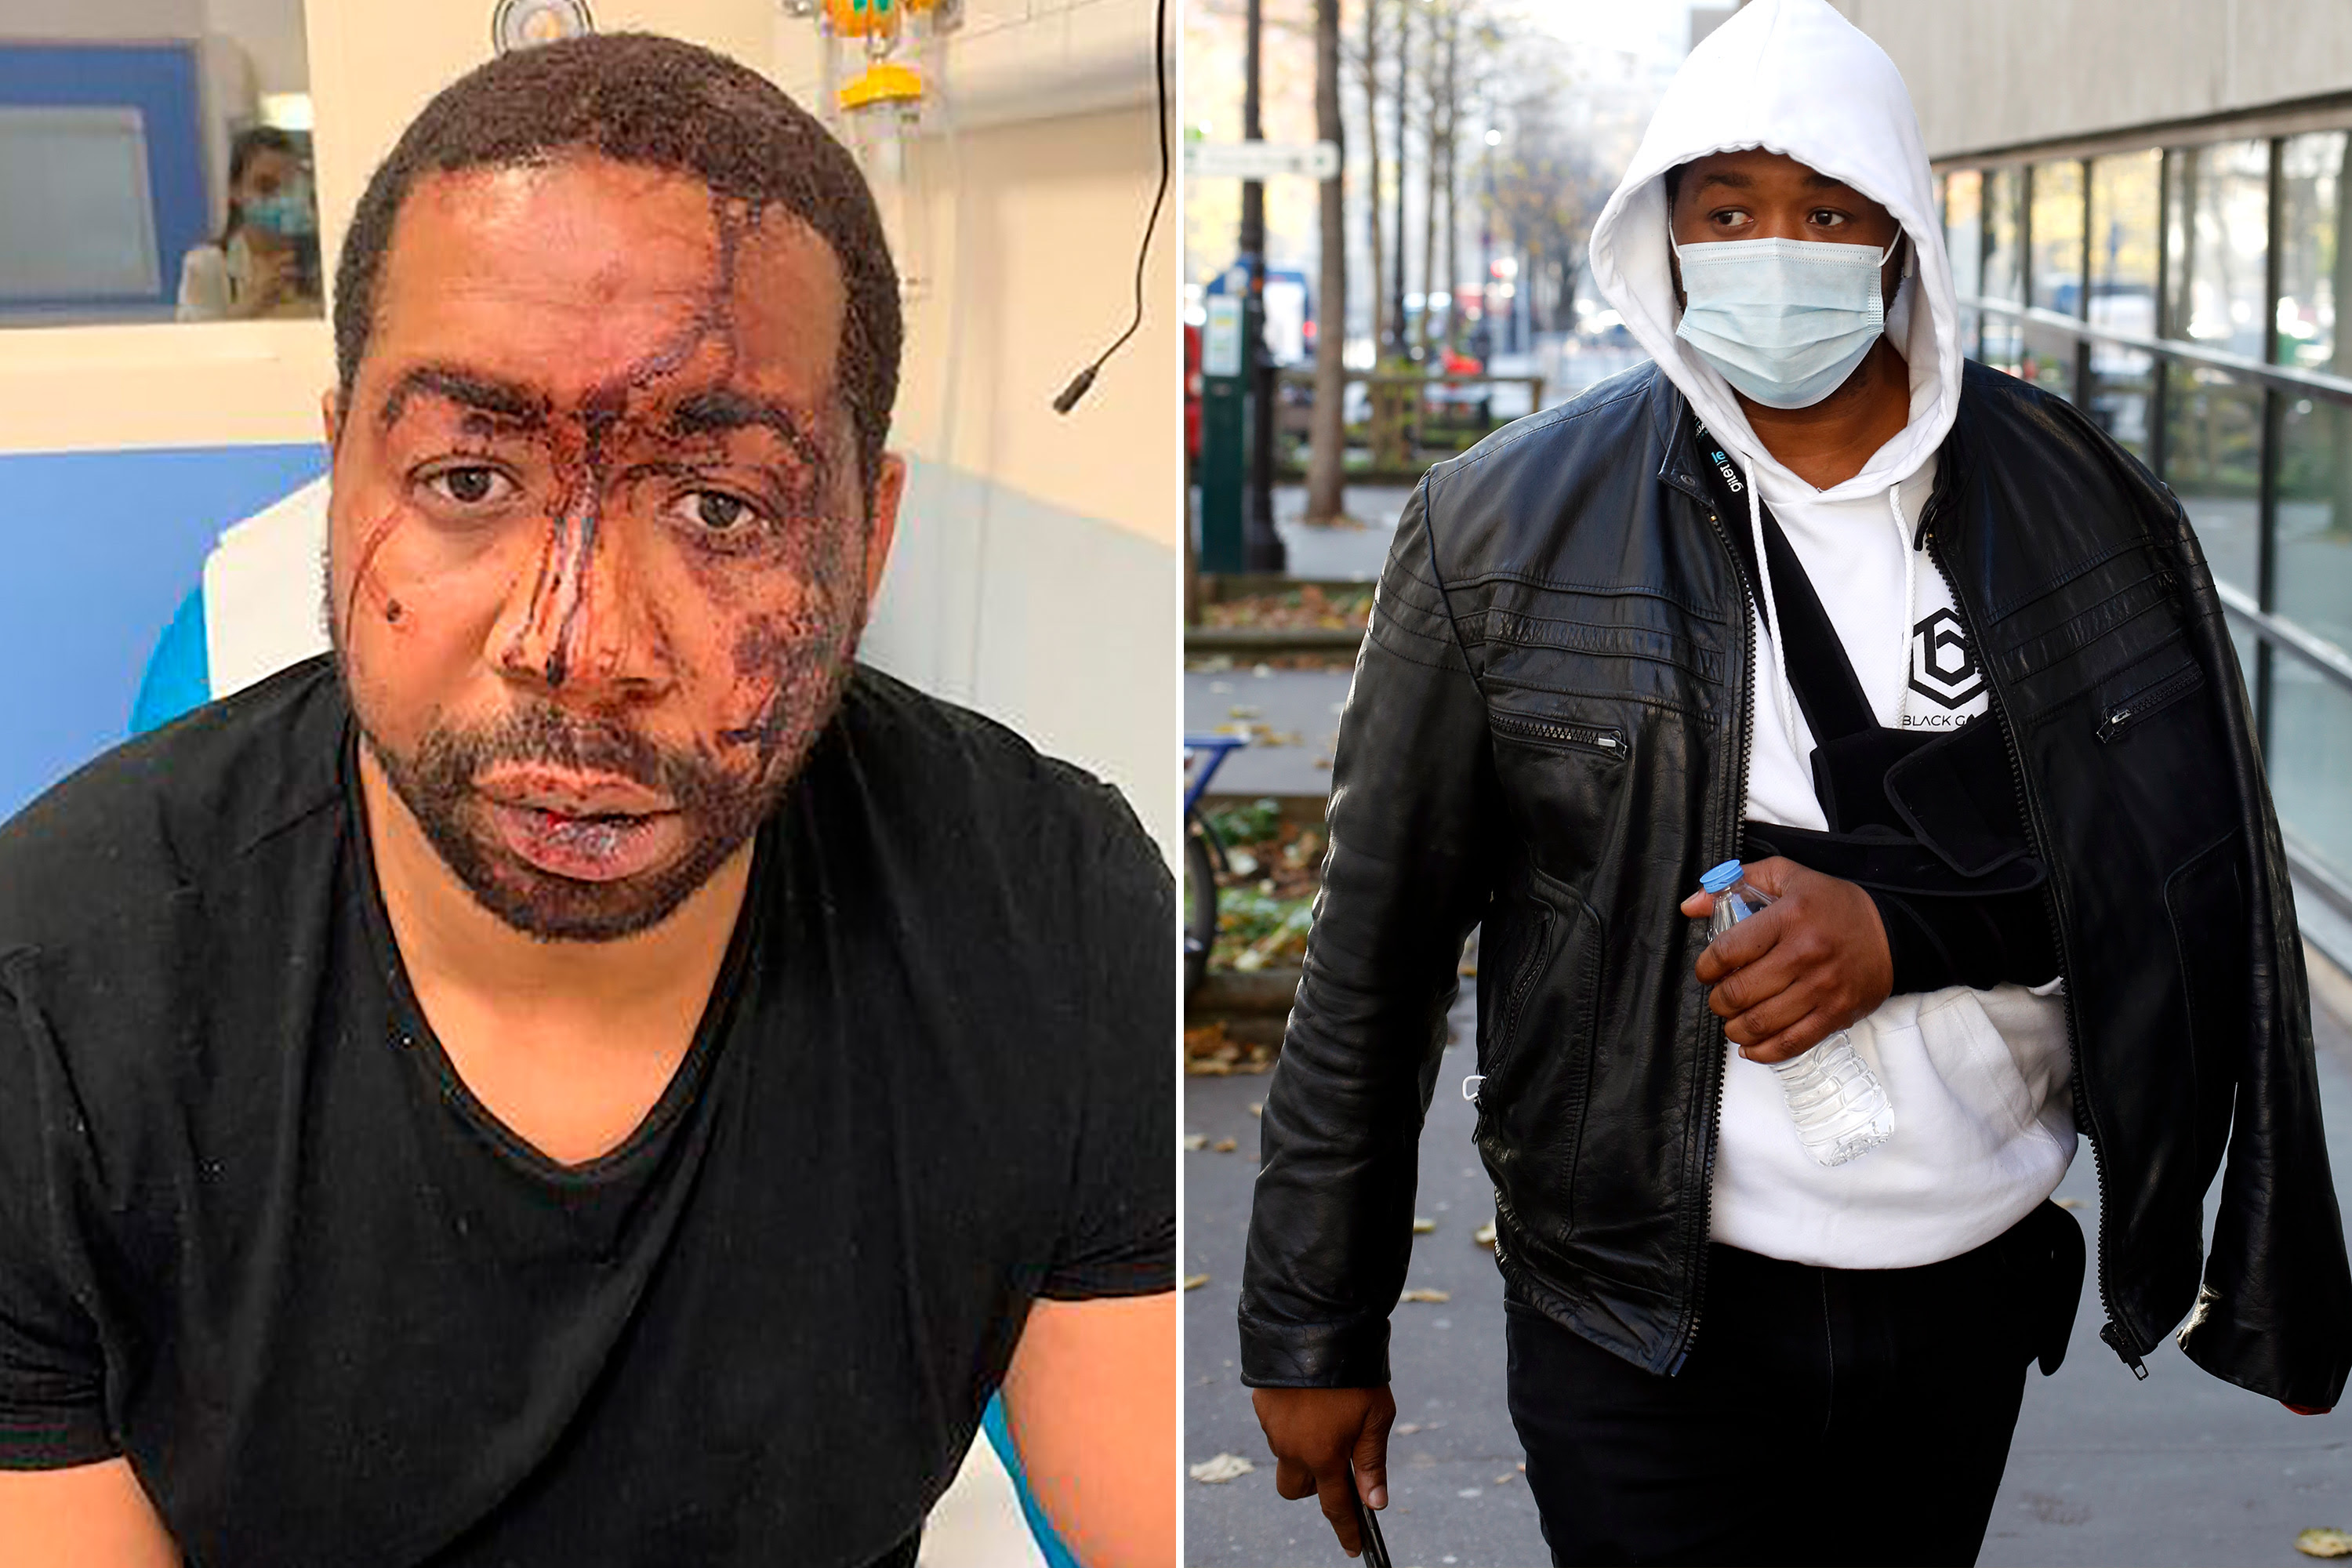 Paris cops suspended over alleged beatdown of black man